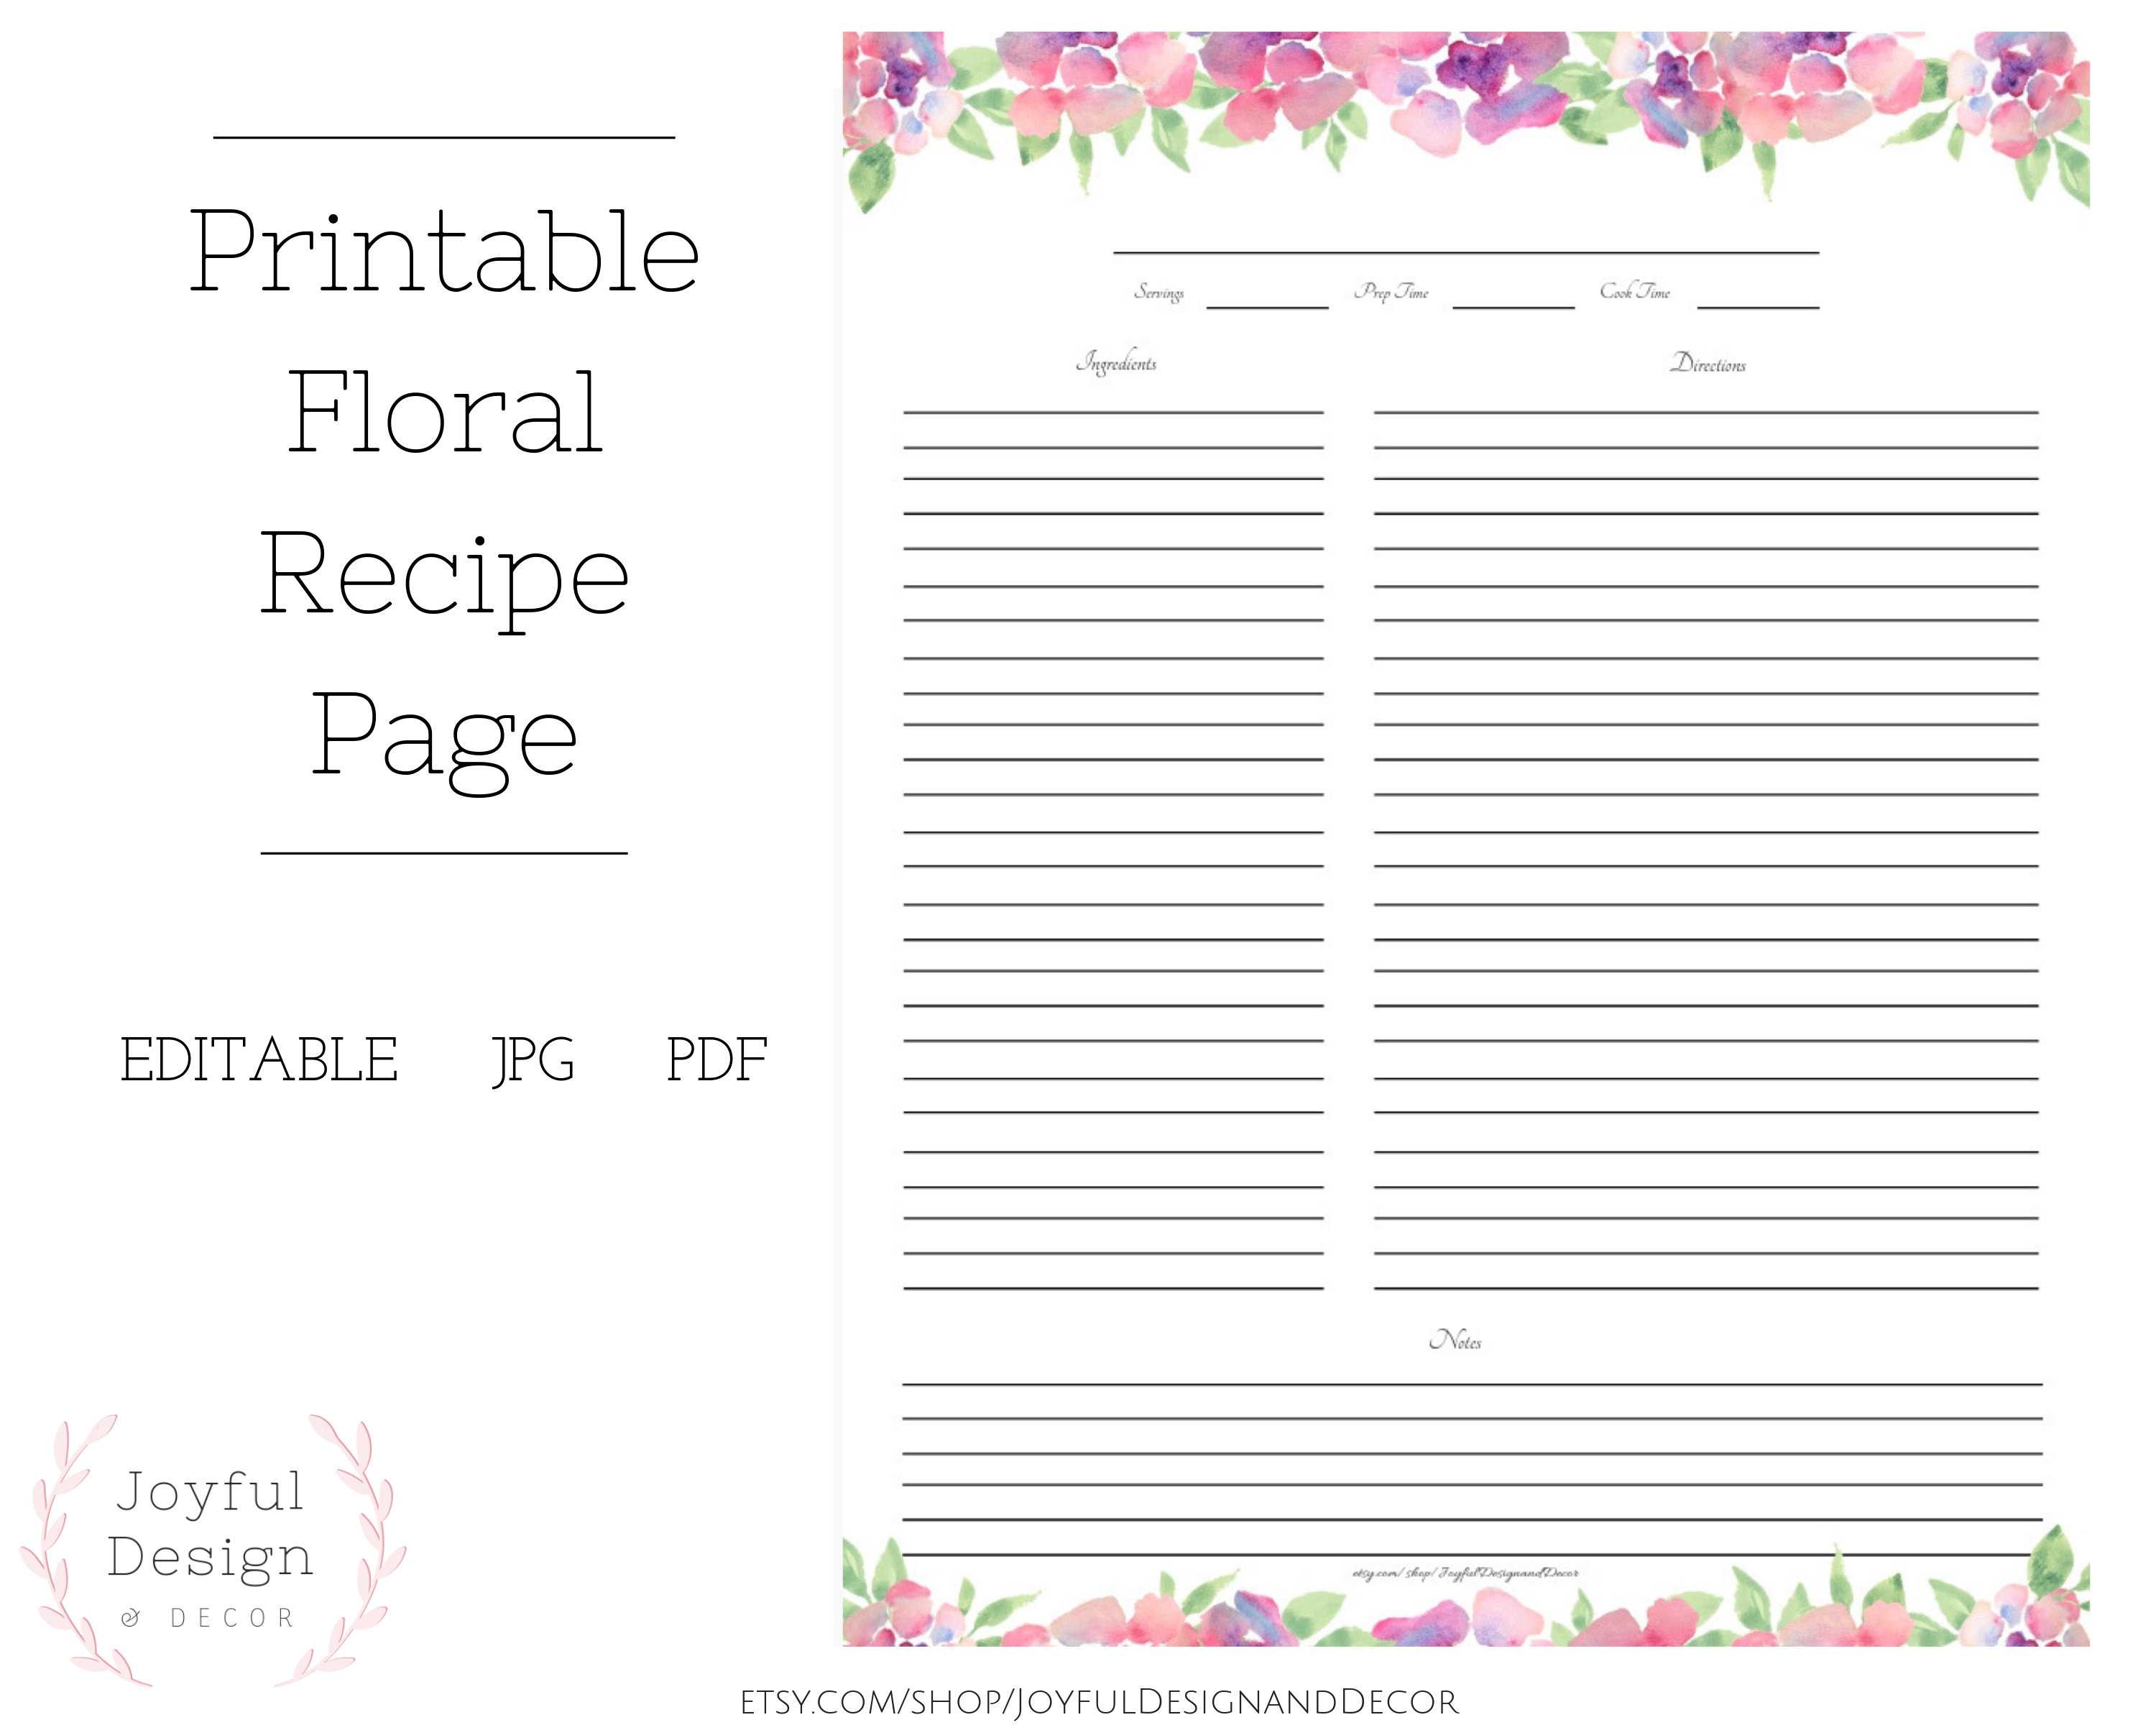 Fillable Recipe Page Floral Recipe Page Blank Recipe Template Recipe  Organization Recipe Storage Ideas Full Page Recipe Card Recipe Cards For Fillable Recipe Card Template